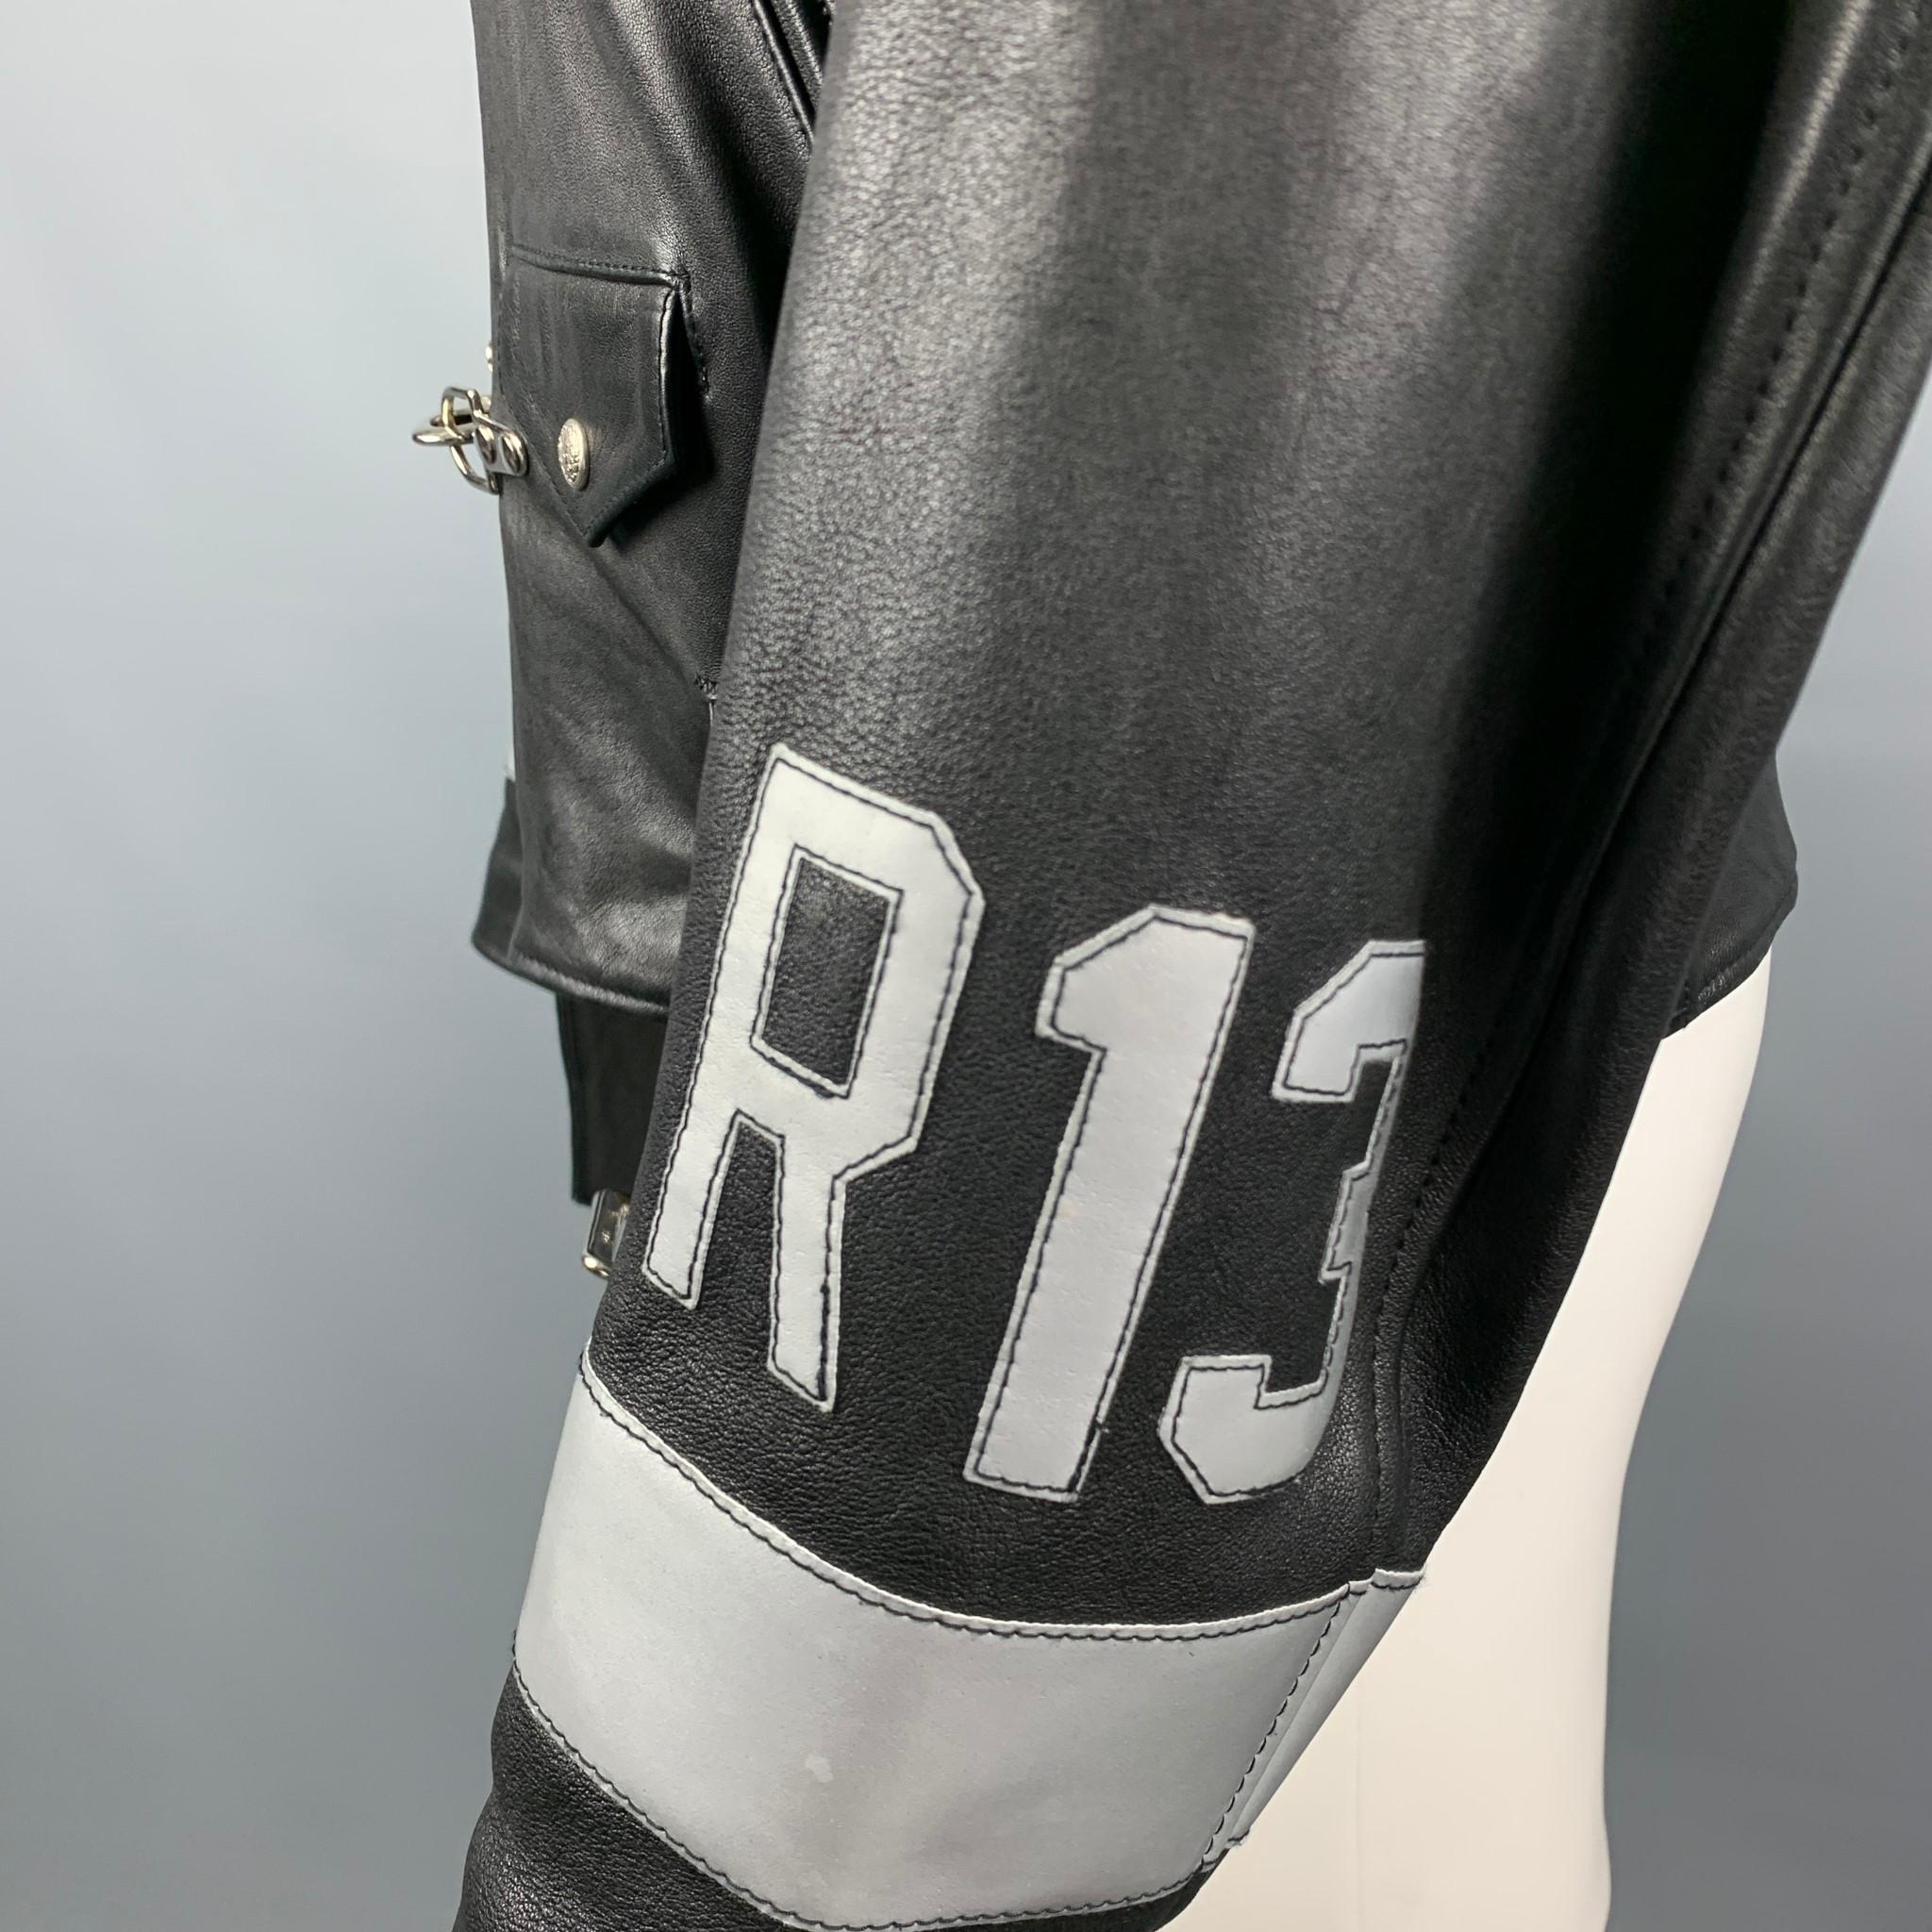 r13 leather jacket